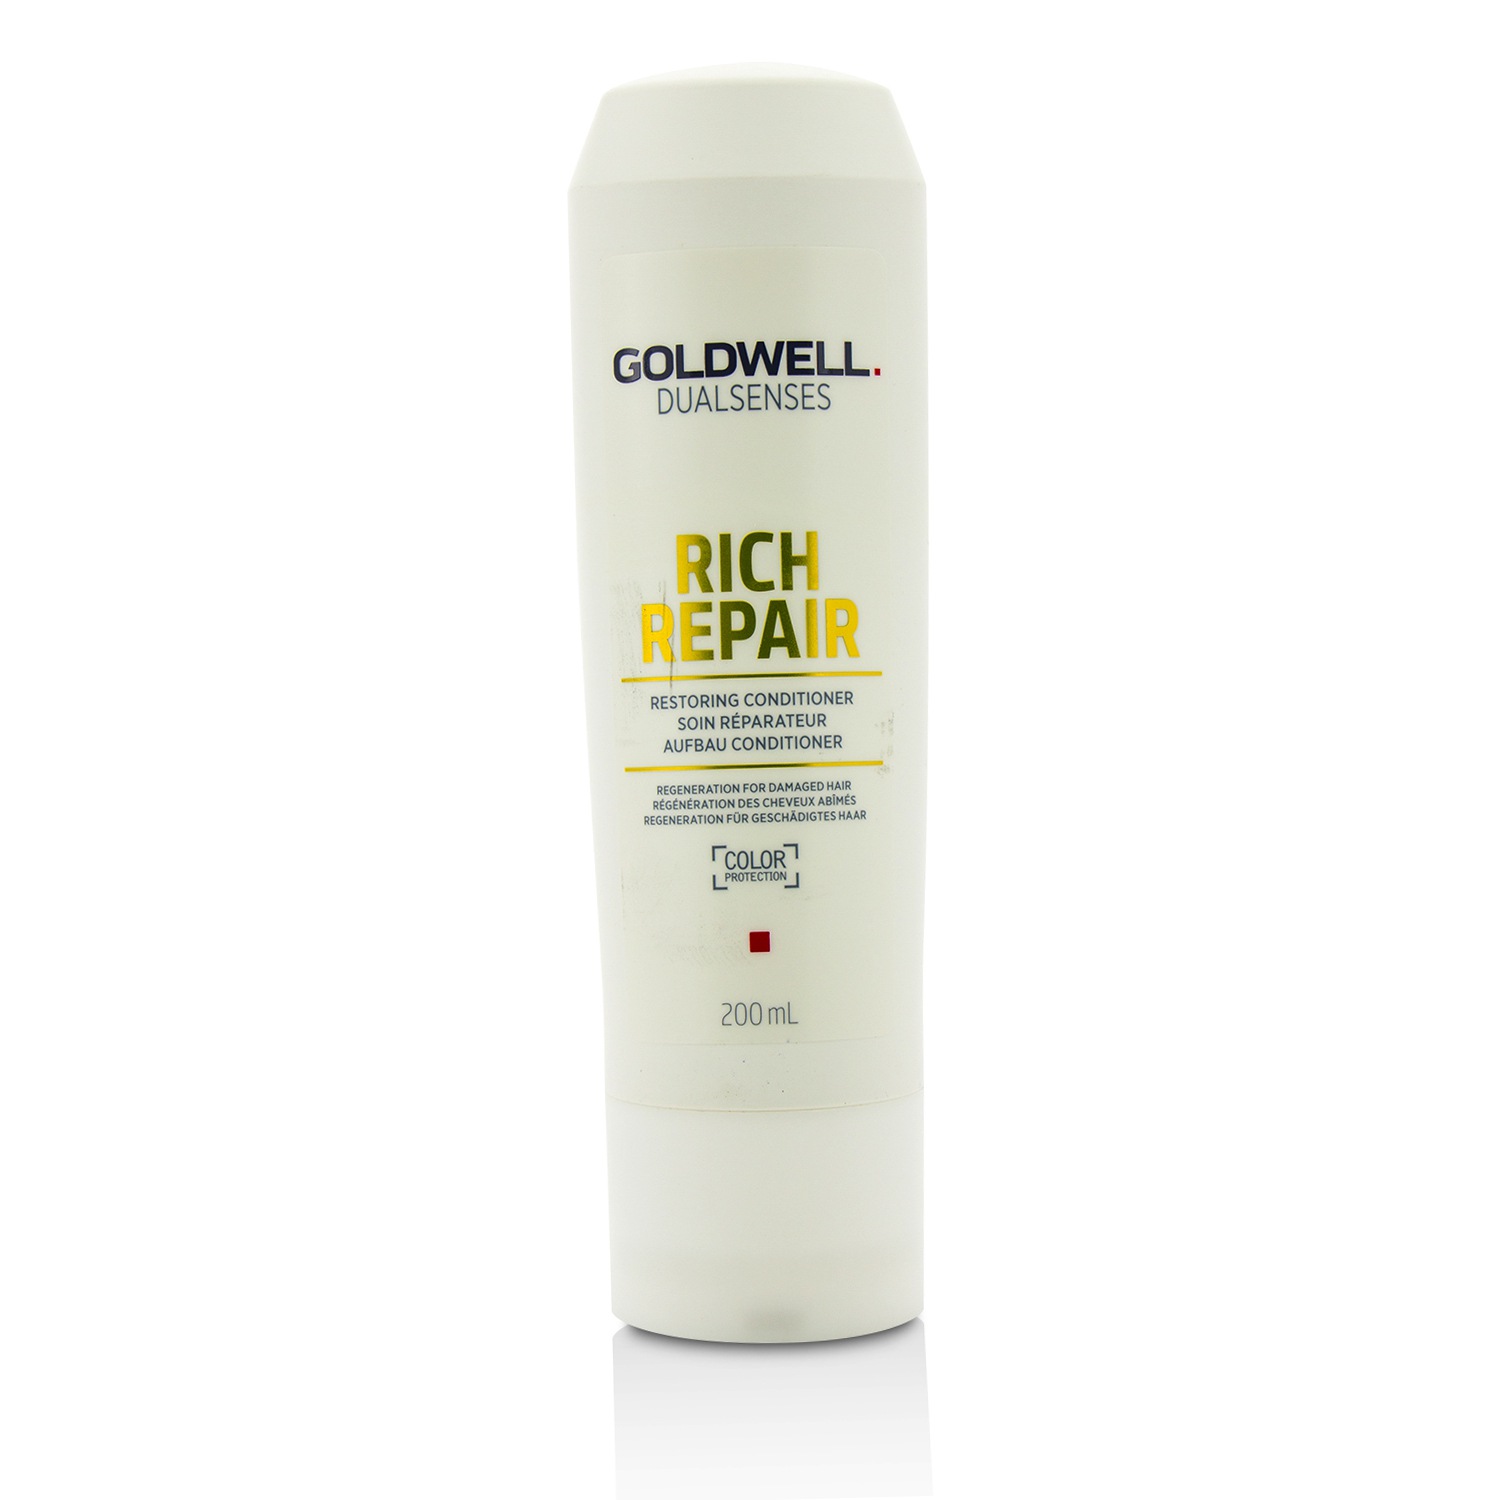 Dual Senses Rich Repair Restoring Conditioner (Regeneration For Damaged Hair) Goldwell Image